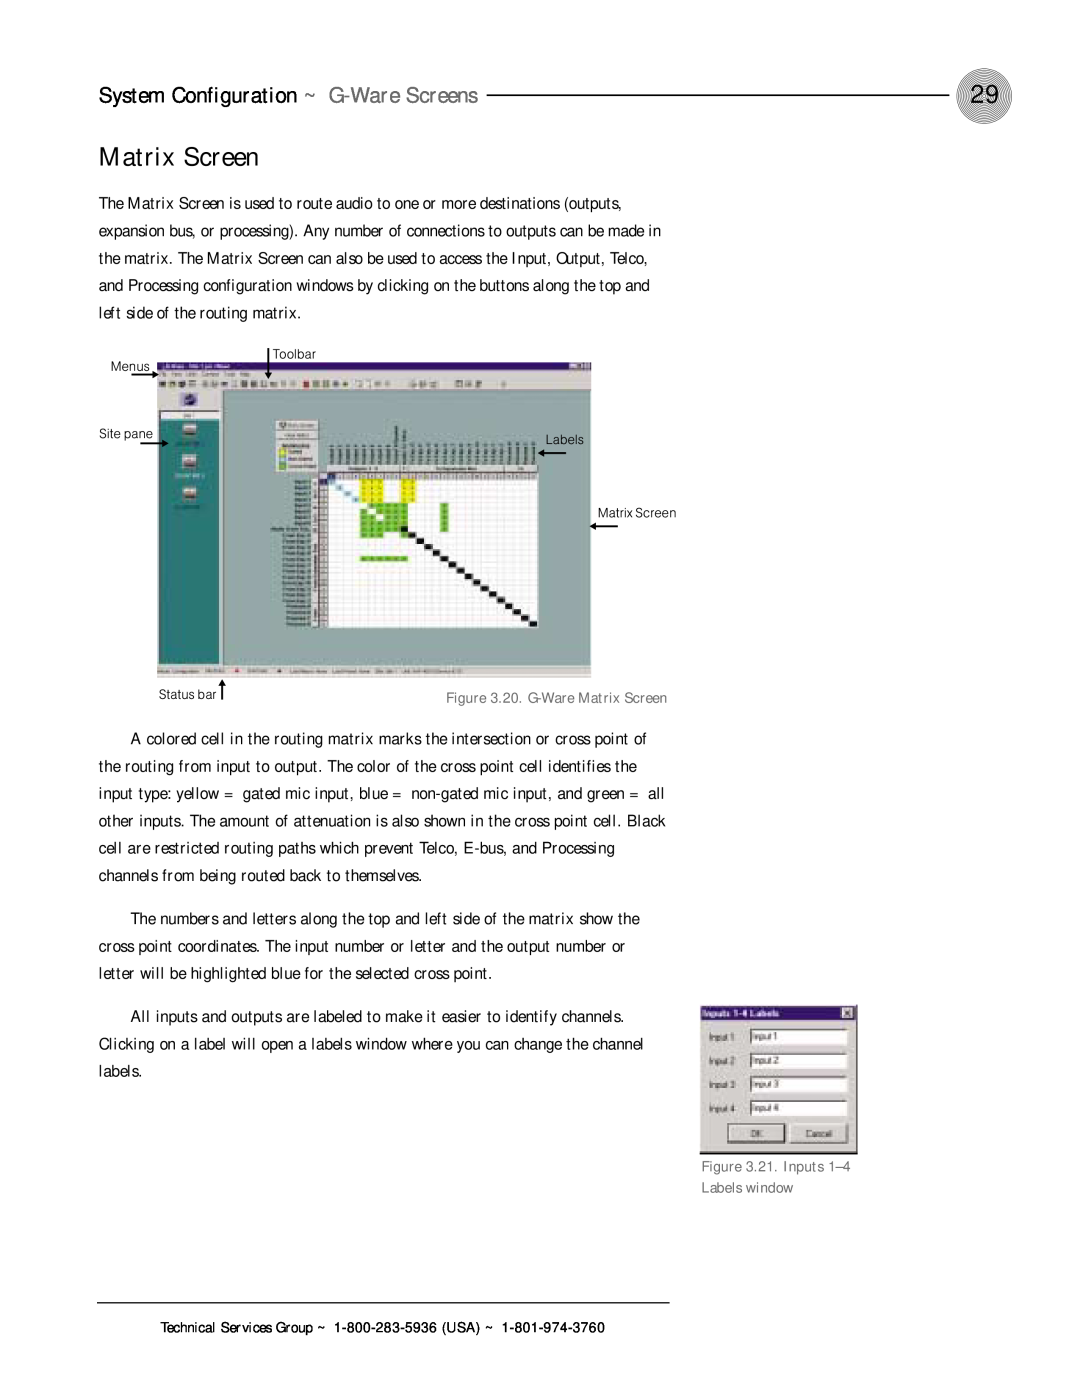 ClearOne comm XAP 400 operation manual Matrix Screen, System Configuration ~ G-WareScreens 